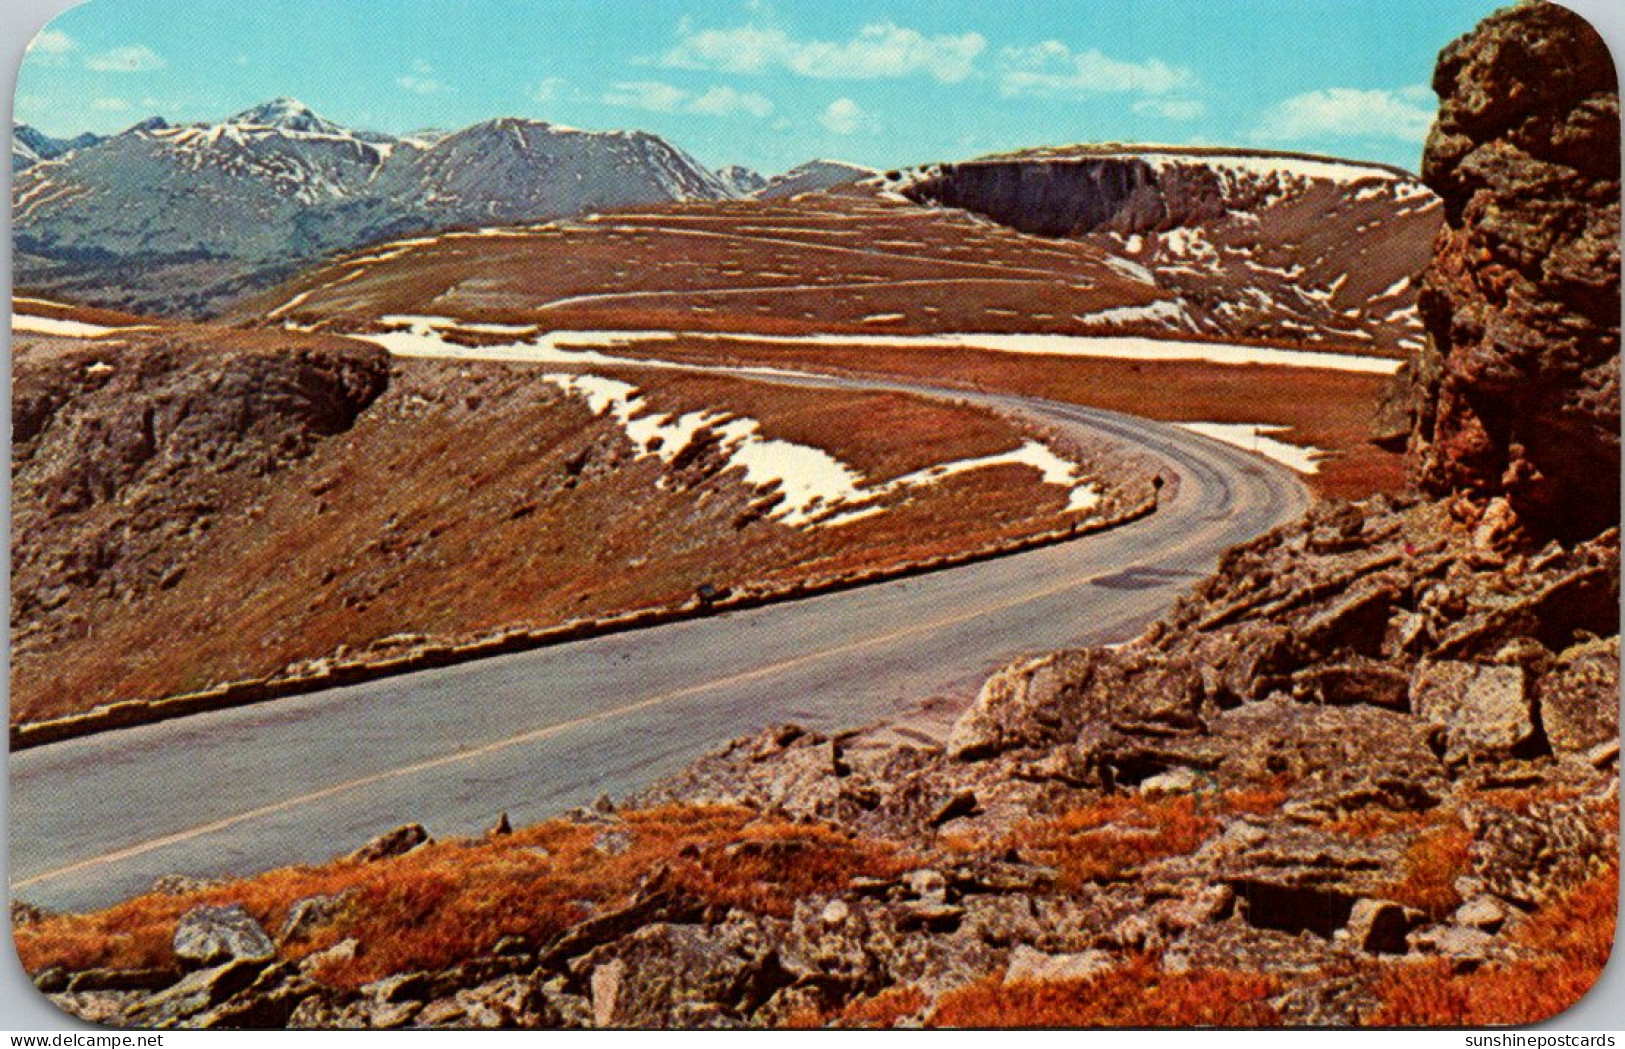 Colorado Rocky Mountains Tundra Curves On The Trail Ridge Road - Rocky Mountains